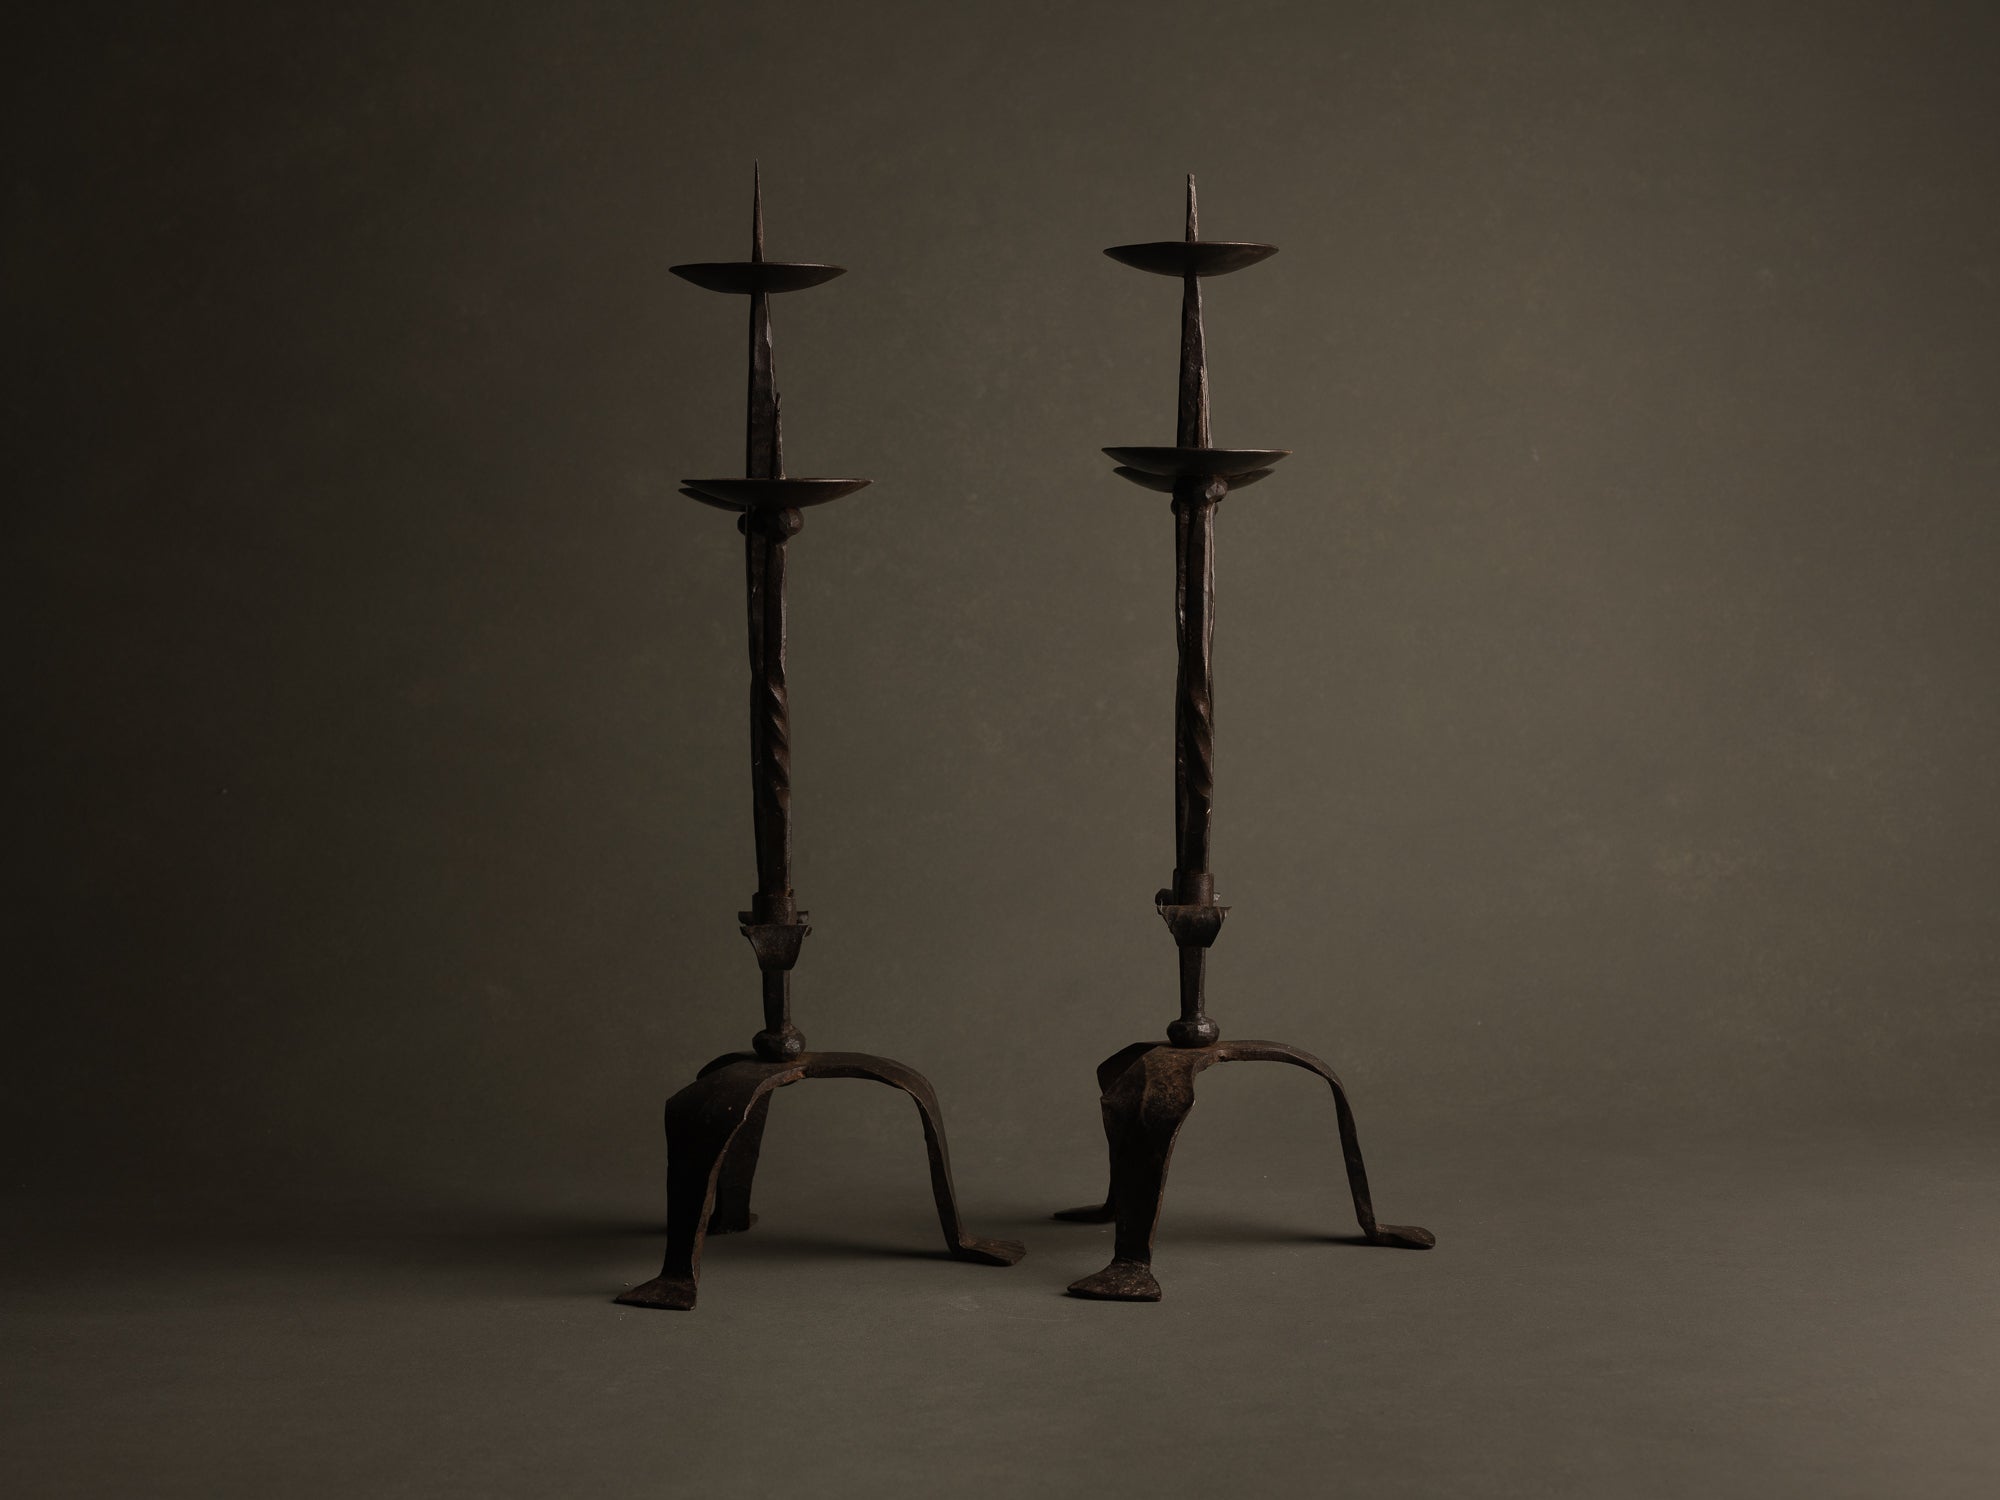 Sculpturale paire de chandeliers en ferronnerie, France (vers 1955)..Huge handmade iron gothic candle holders set, France (circa 1955)